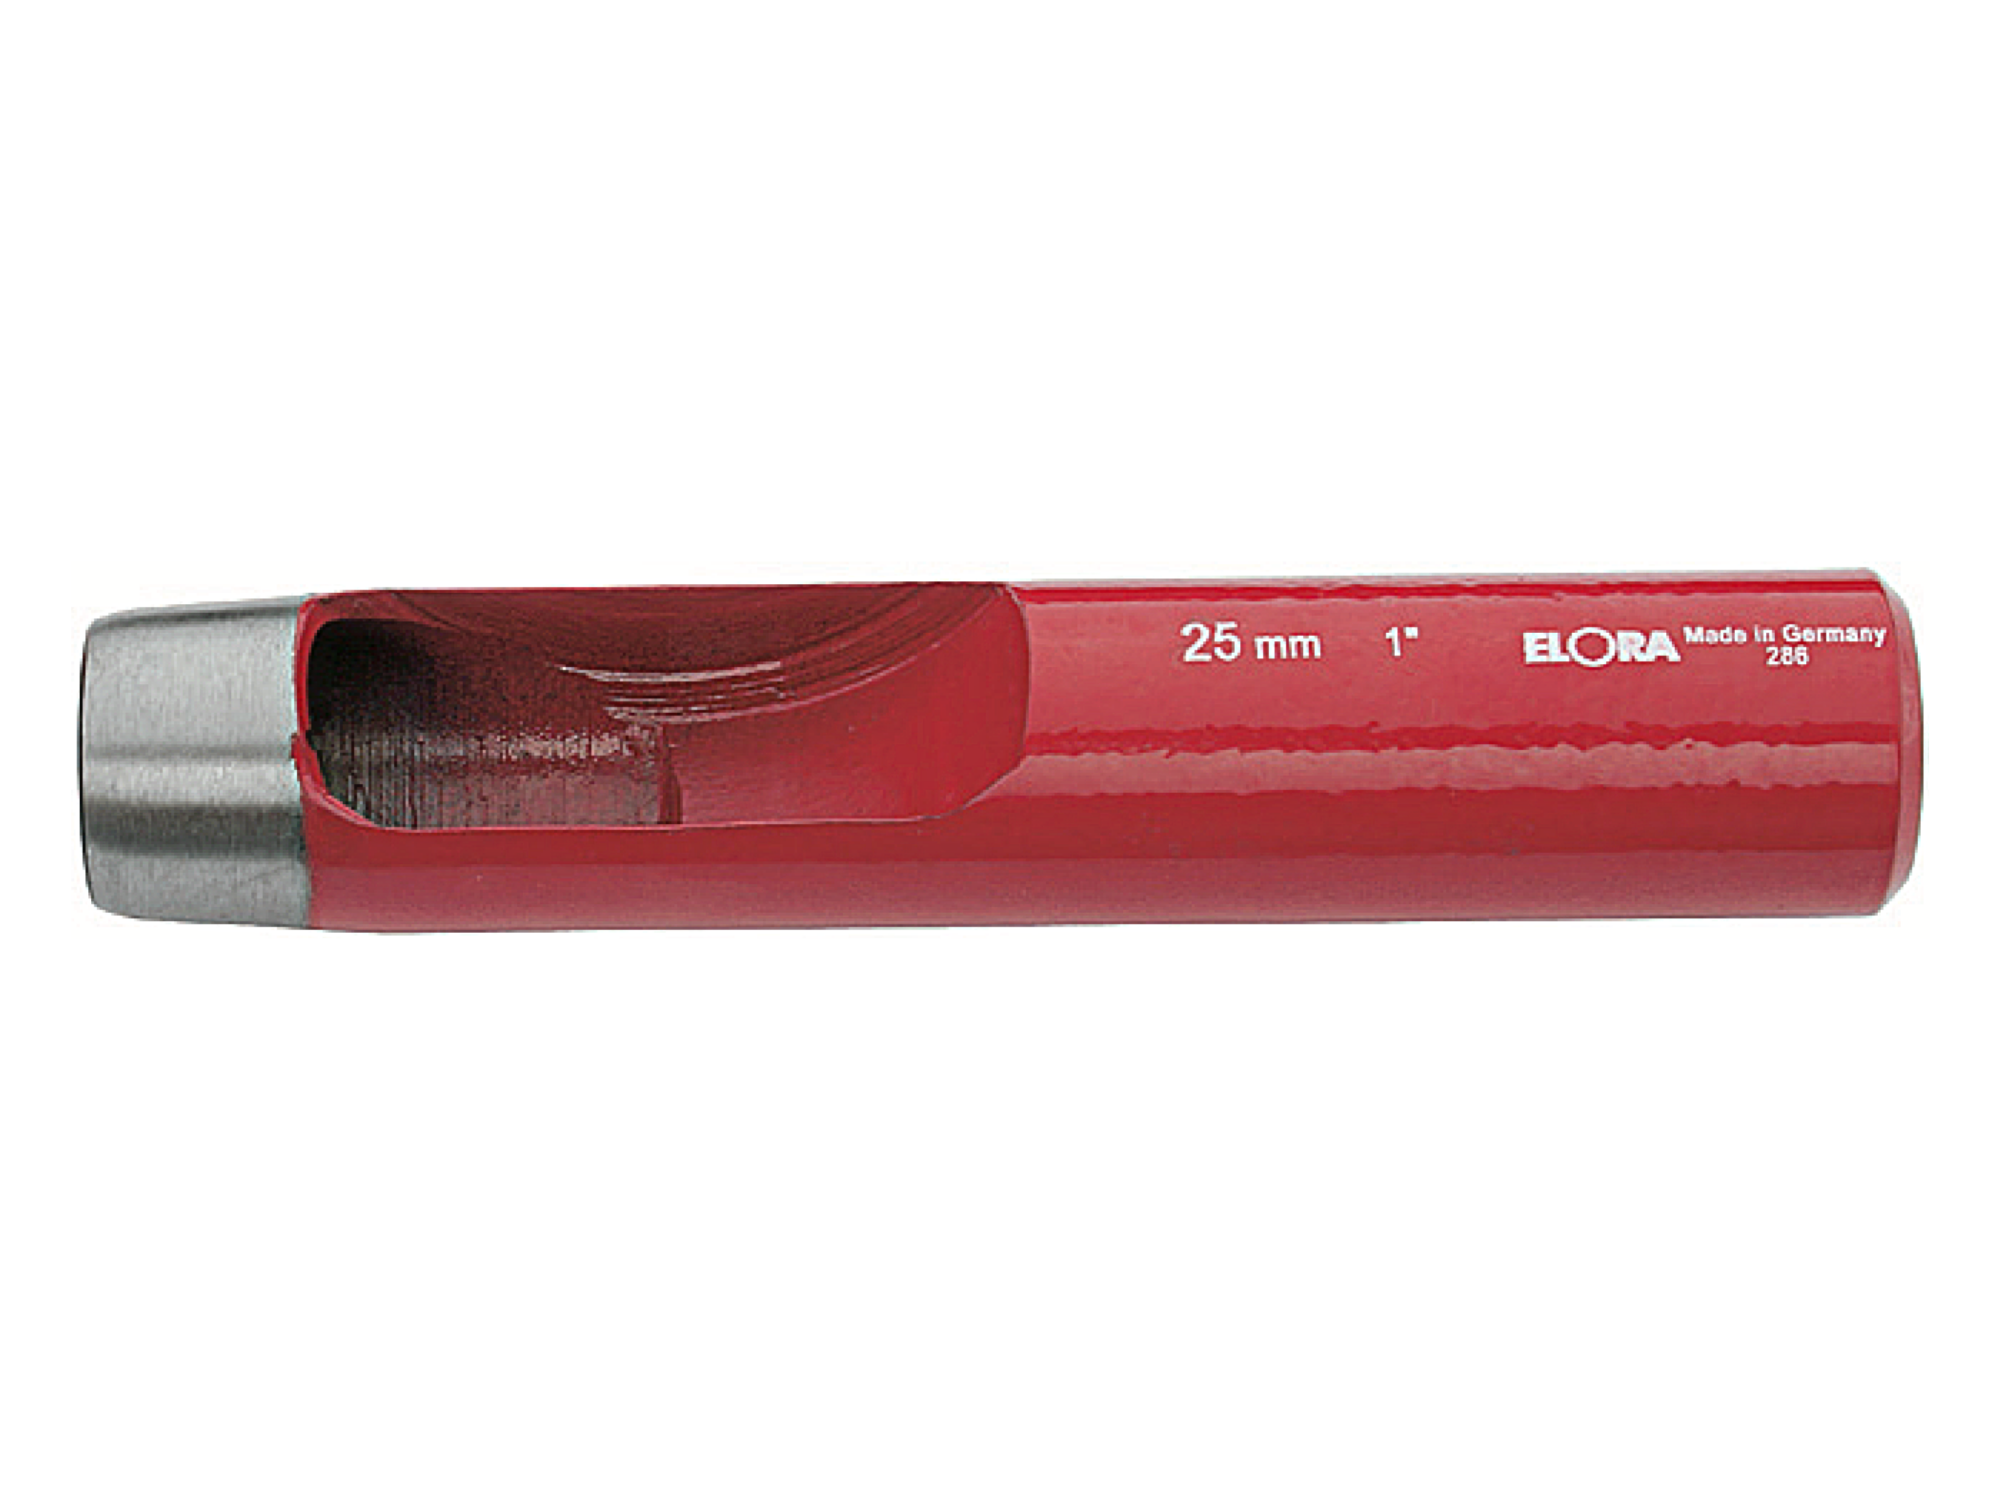 ELORA 286 Belt Punch Shaft Red (ELORA Tools) - Premium Belt Punch from ELORA - Shop now at Yew Aik.